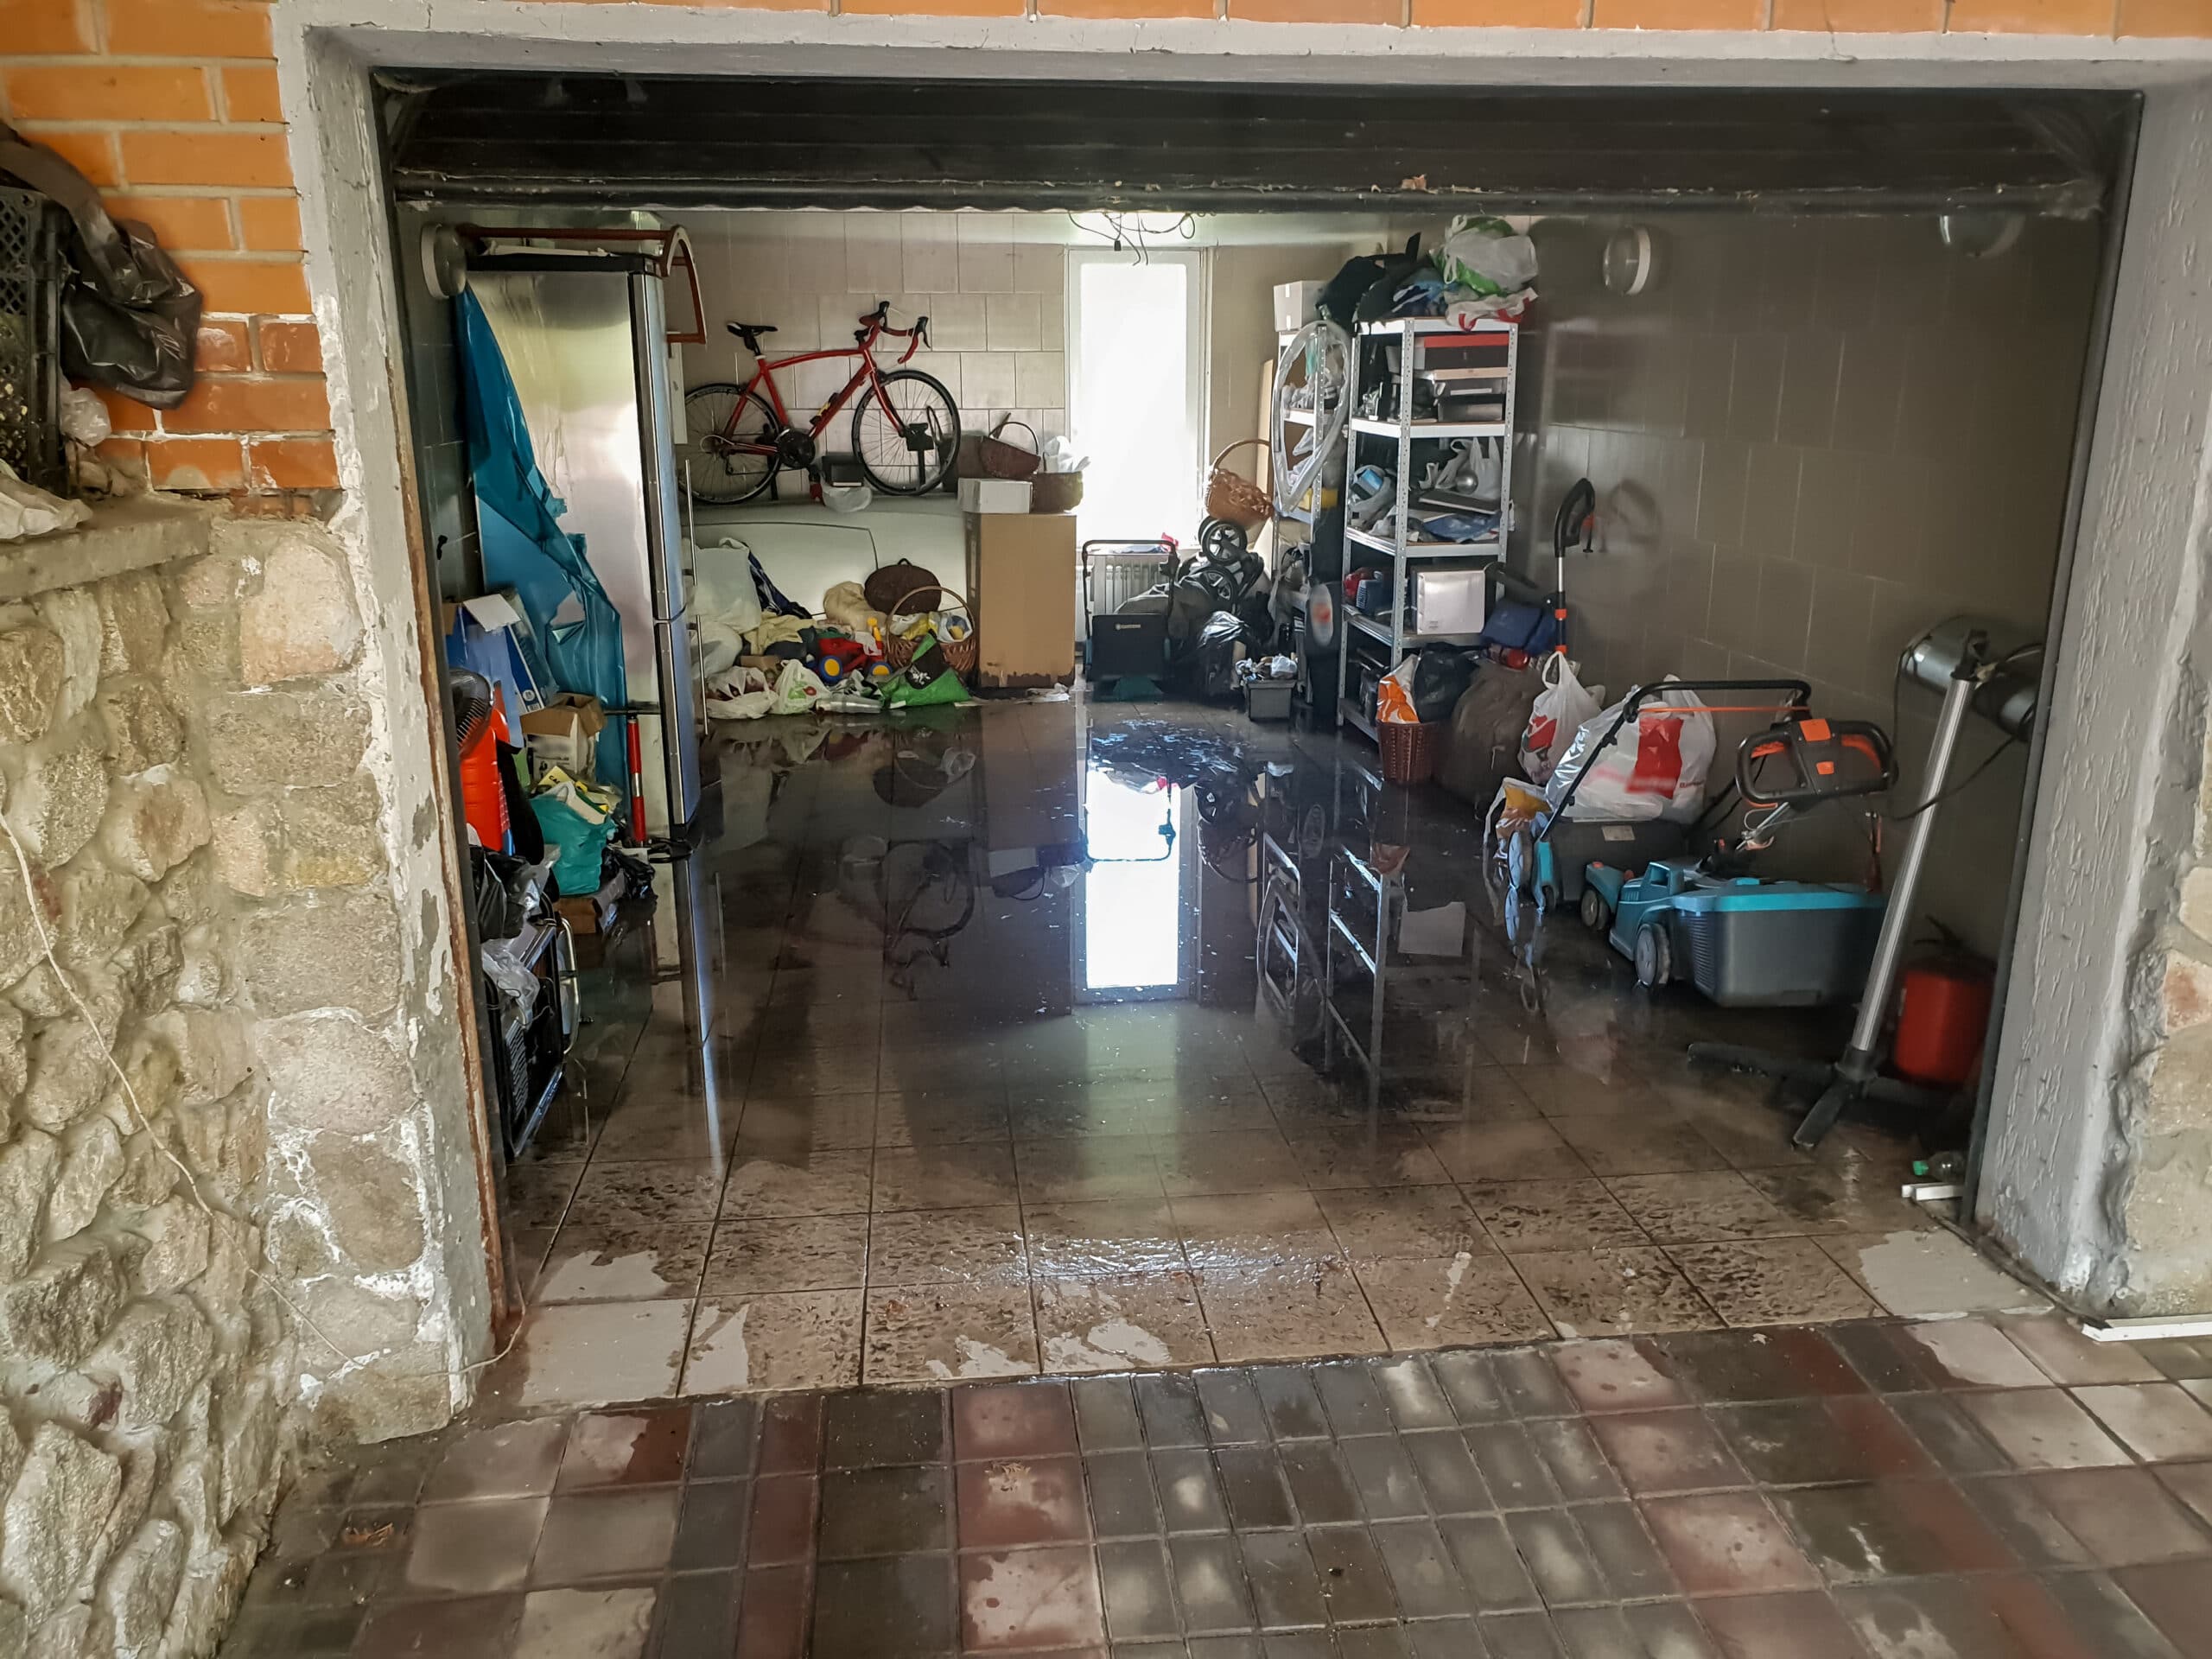 A flooded garage basement after heavy rain